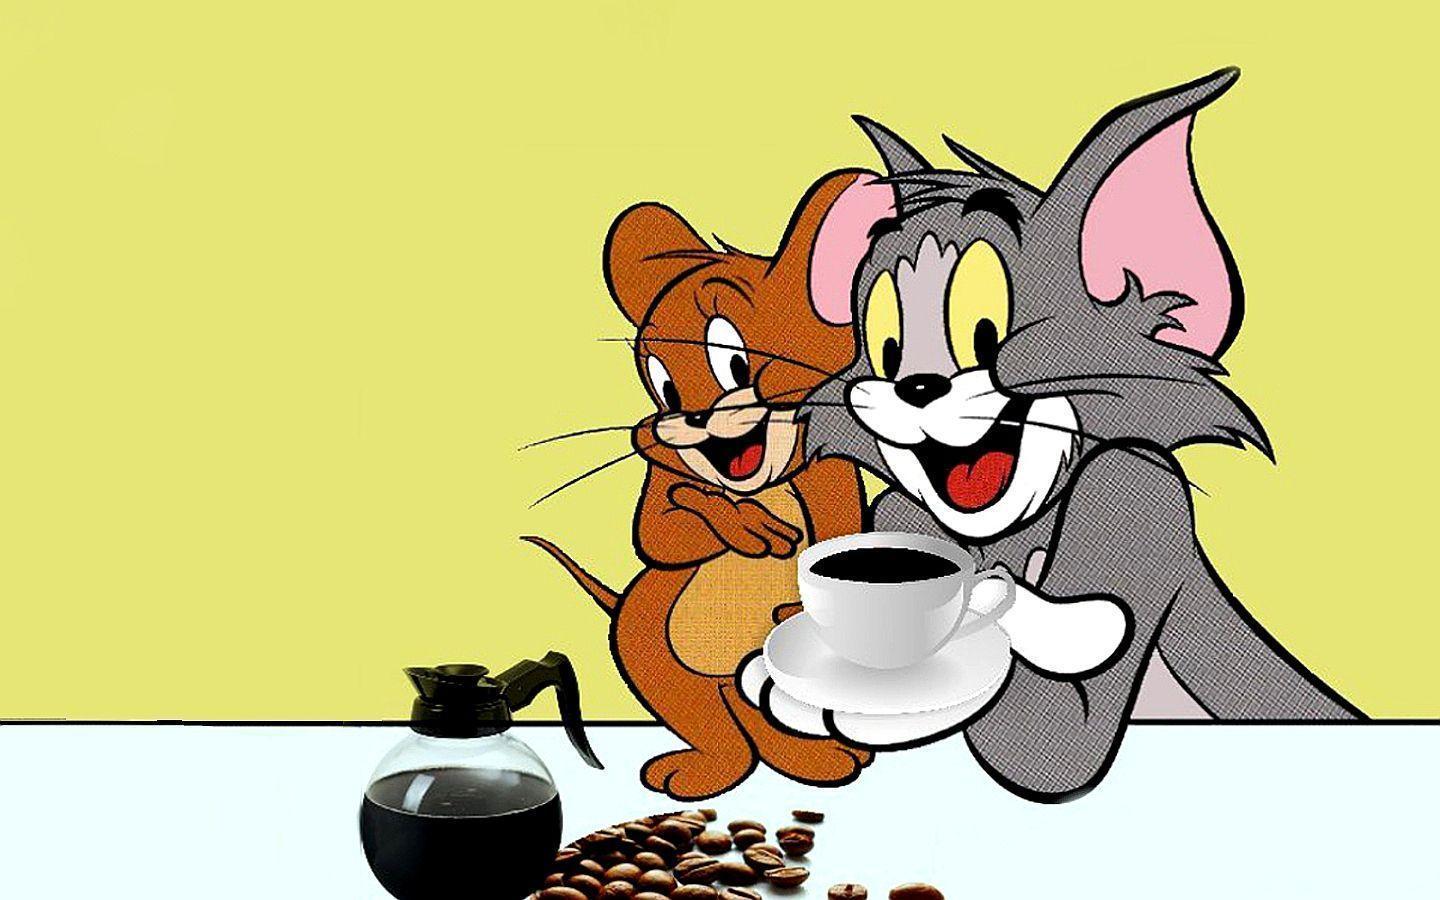 Tom And Jerry HD Wallpaper. wallpaperxy.com. Cartoon